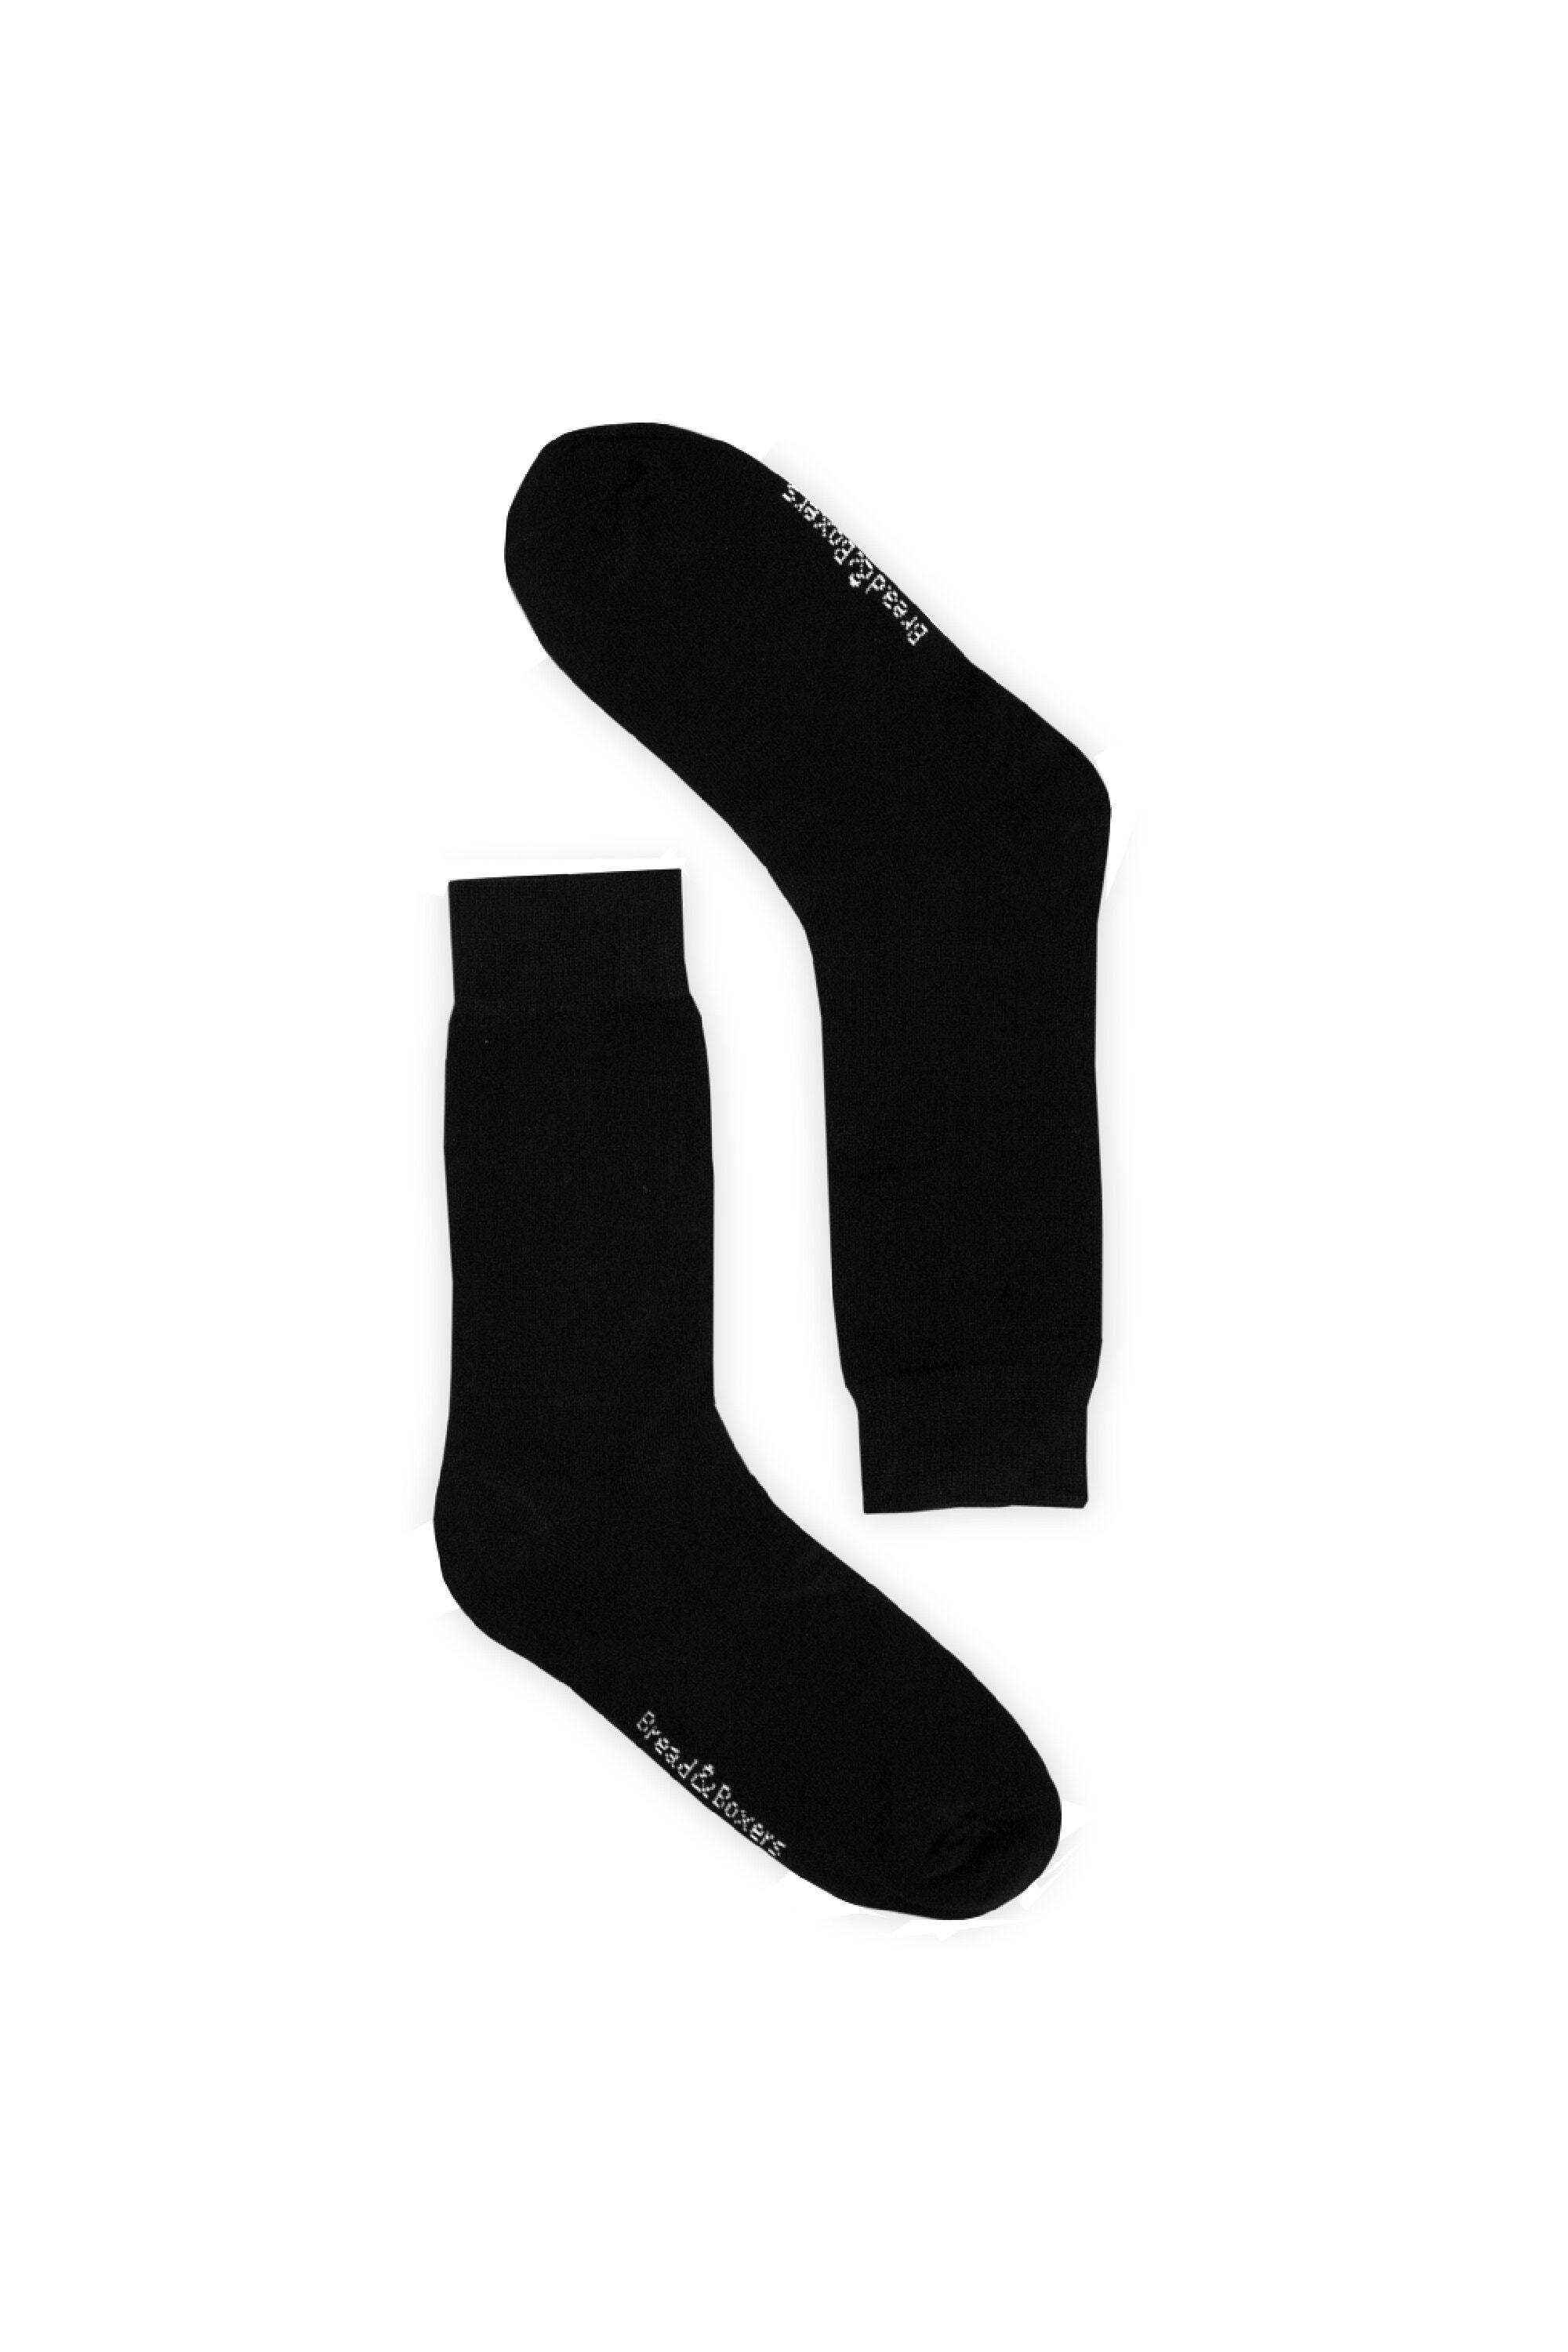 BnB-30102-Socks_black